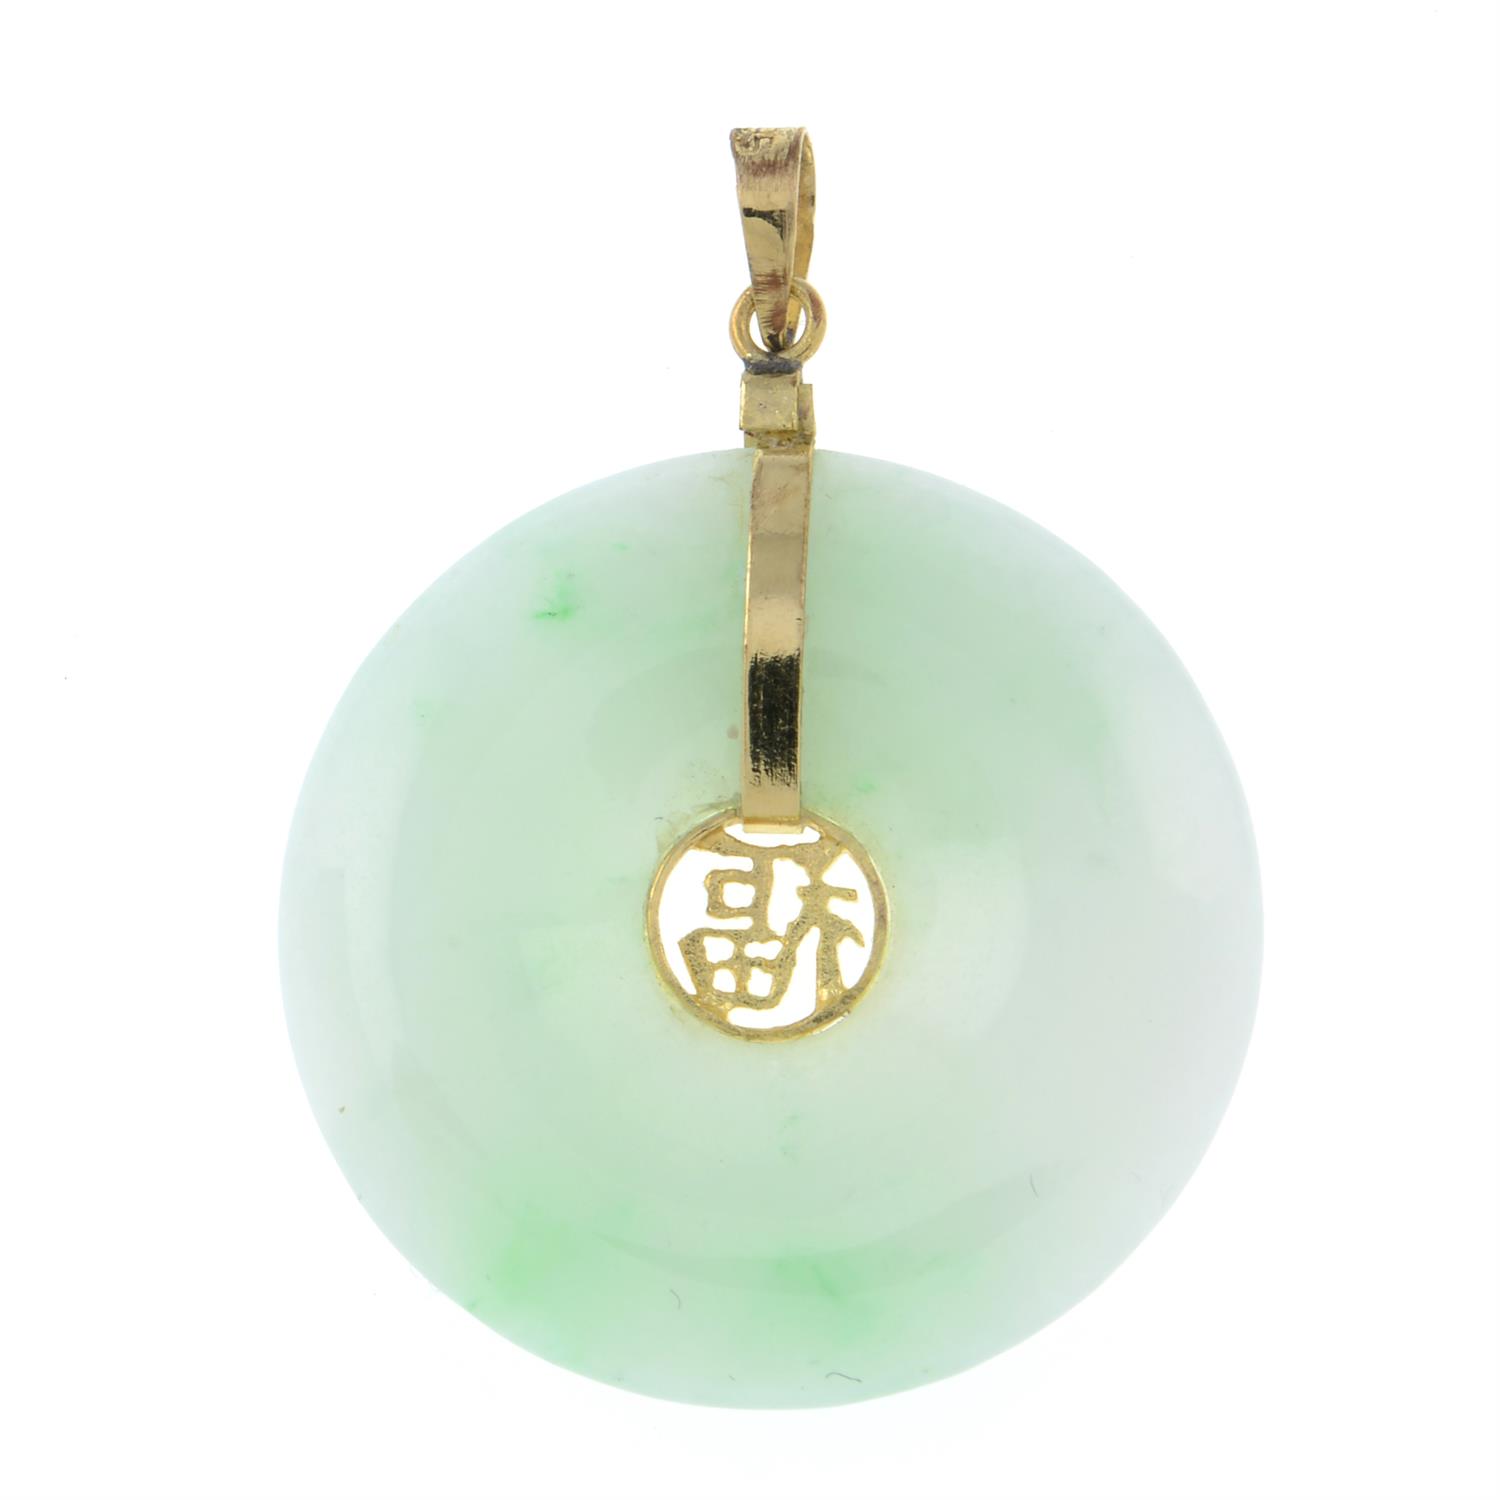 A jade bi pendant, with oriental character motif.